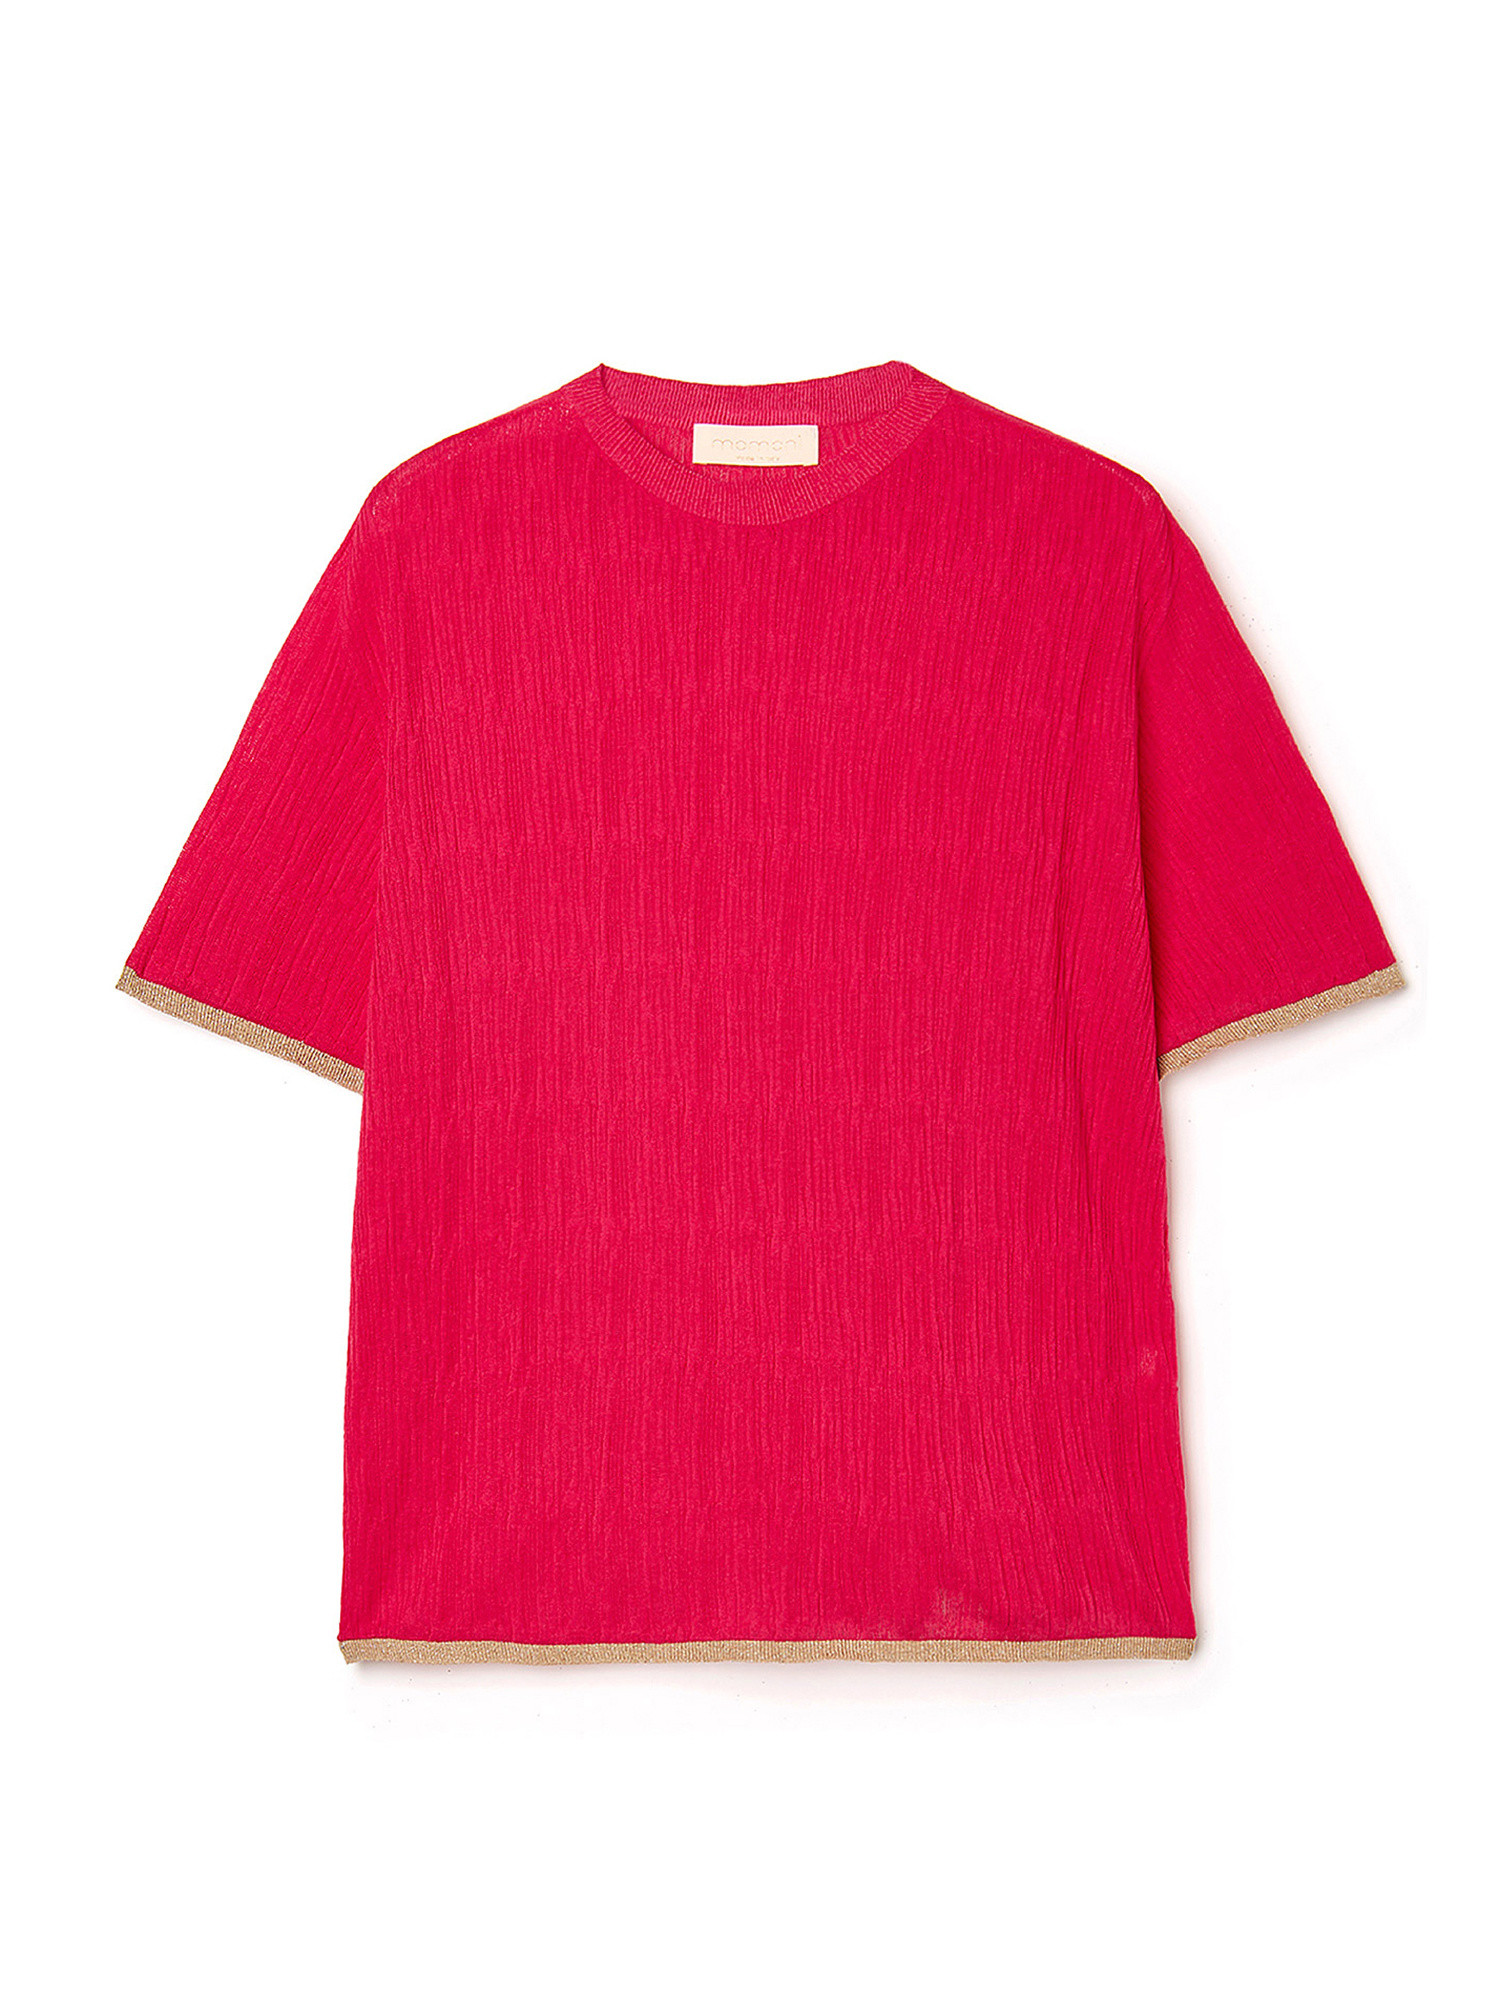 T-shirt Beacon in filato di cotone leggero, Rosa fuxia, large image number 0